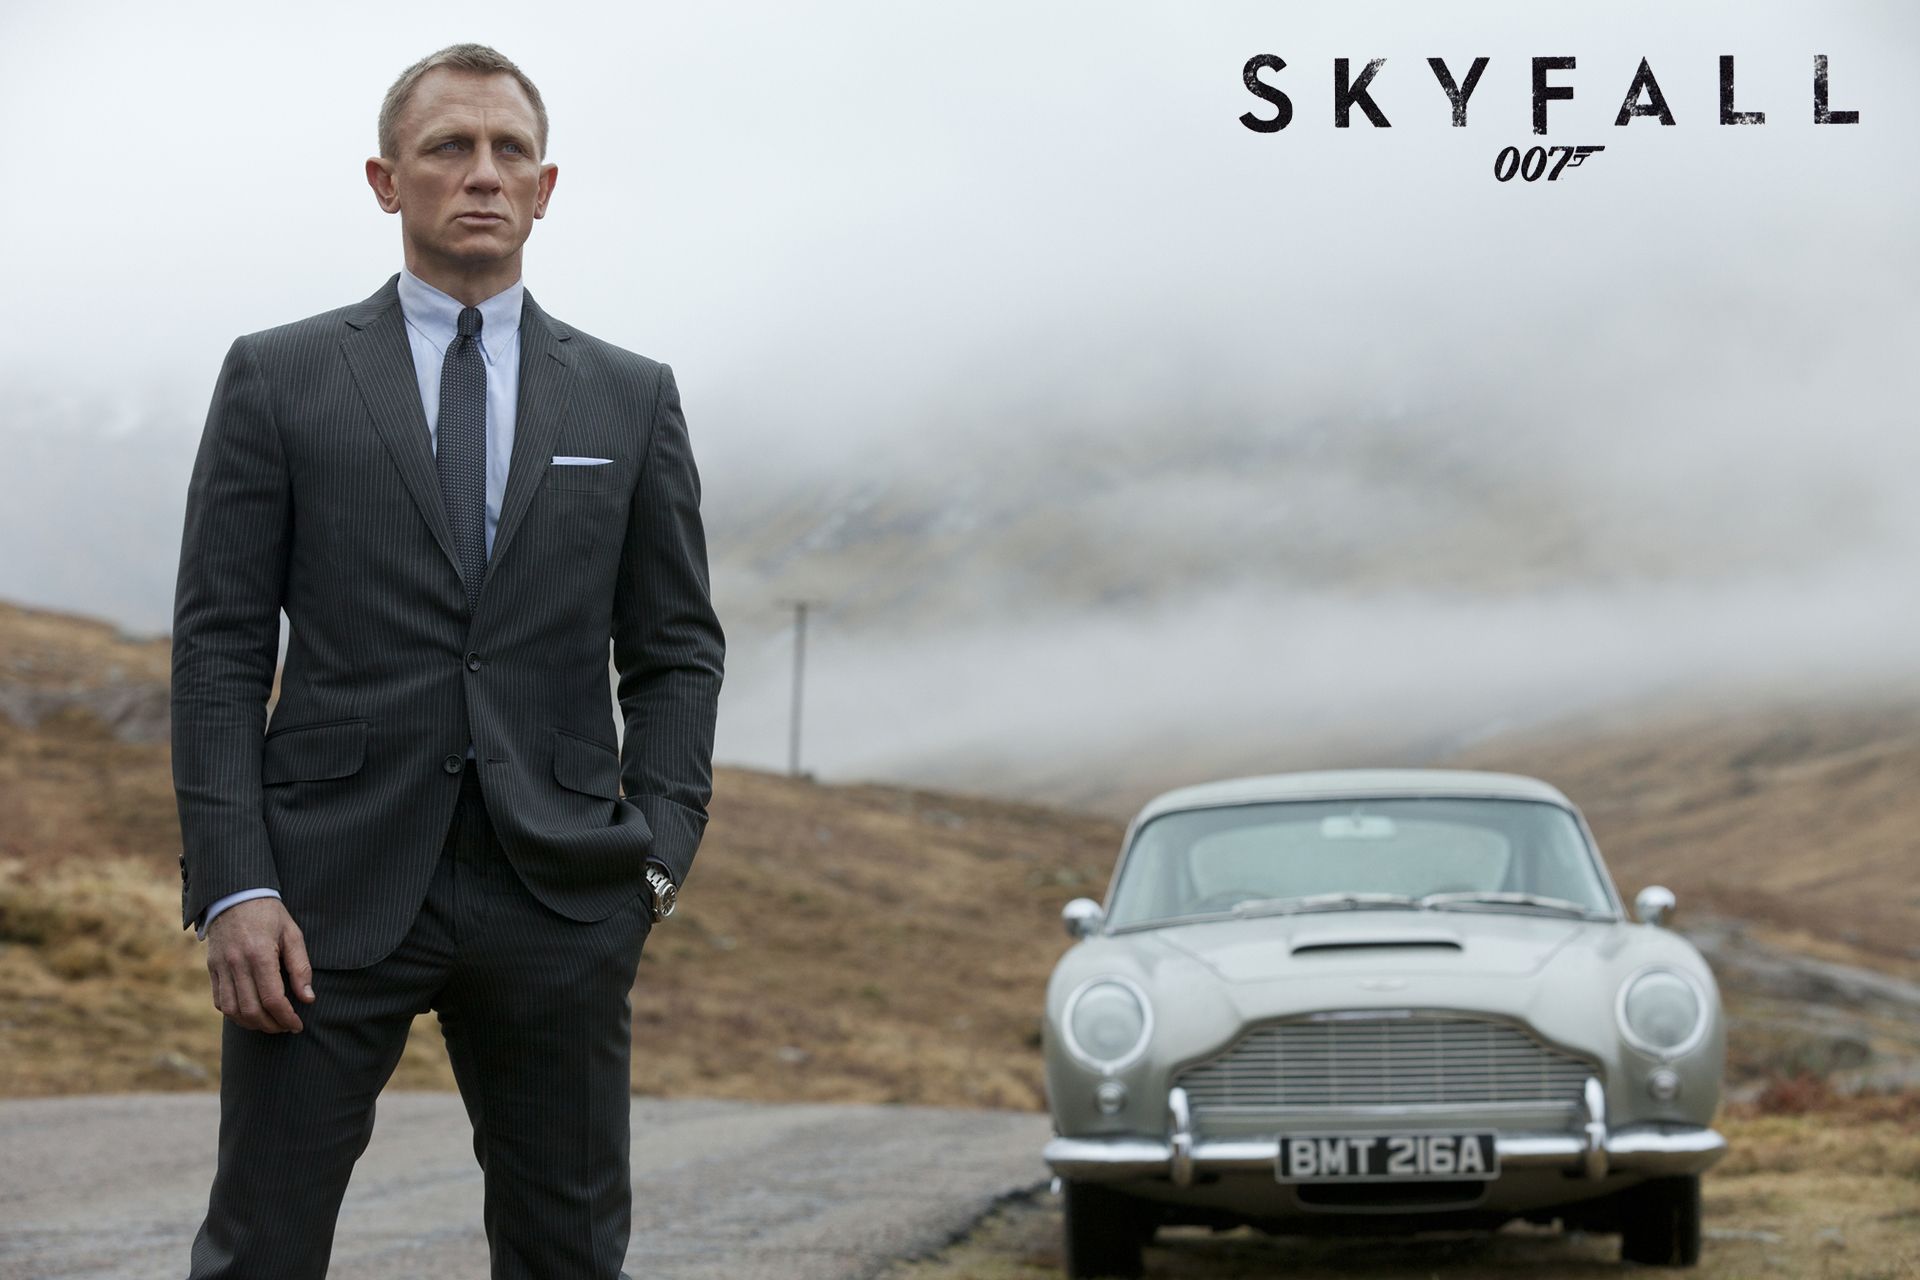 1 James Bond 007 HD Wallpapers | Backgrounds - Wallpaper Abyss